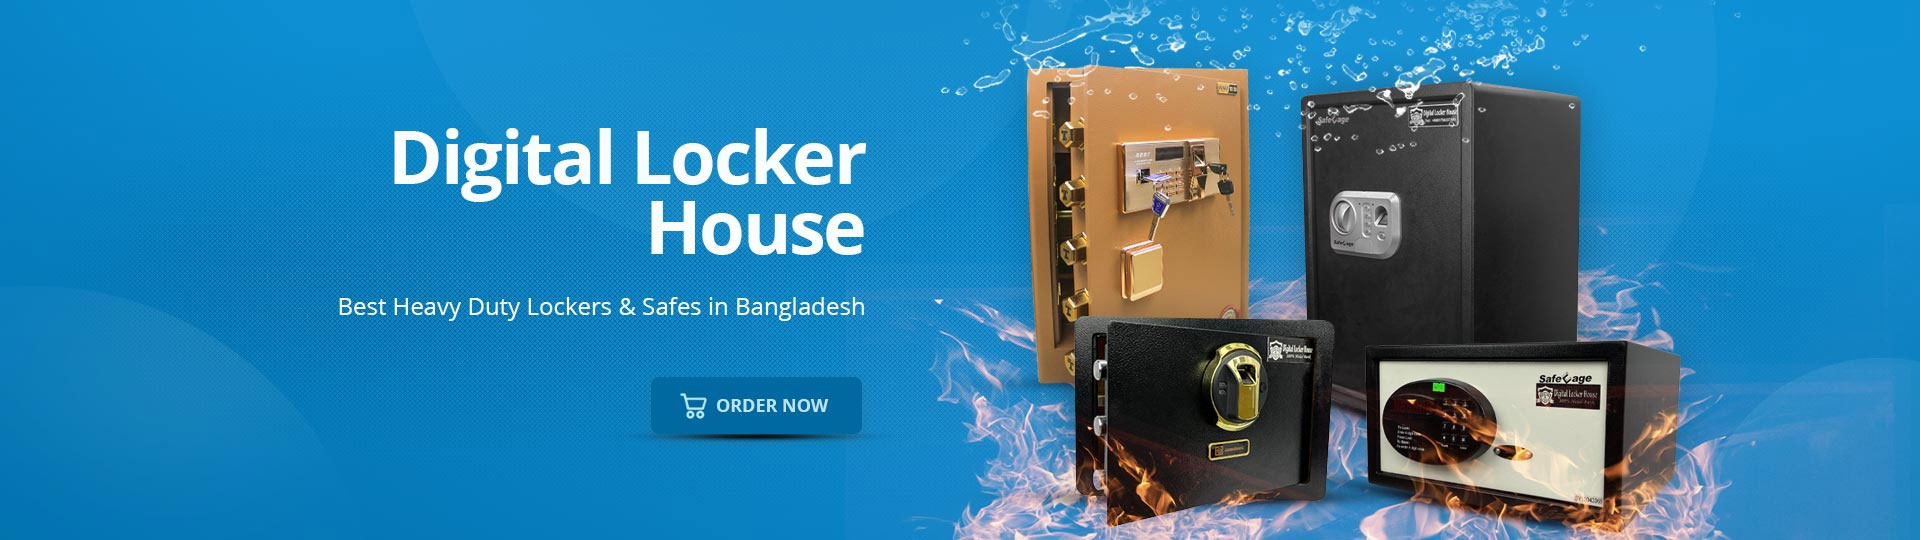 Digital Locker House promo